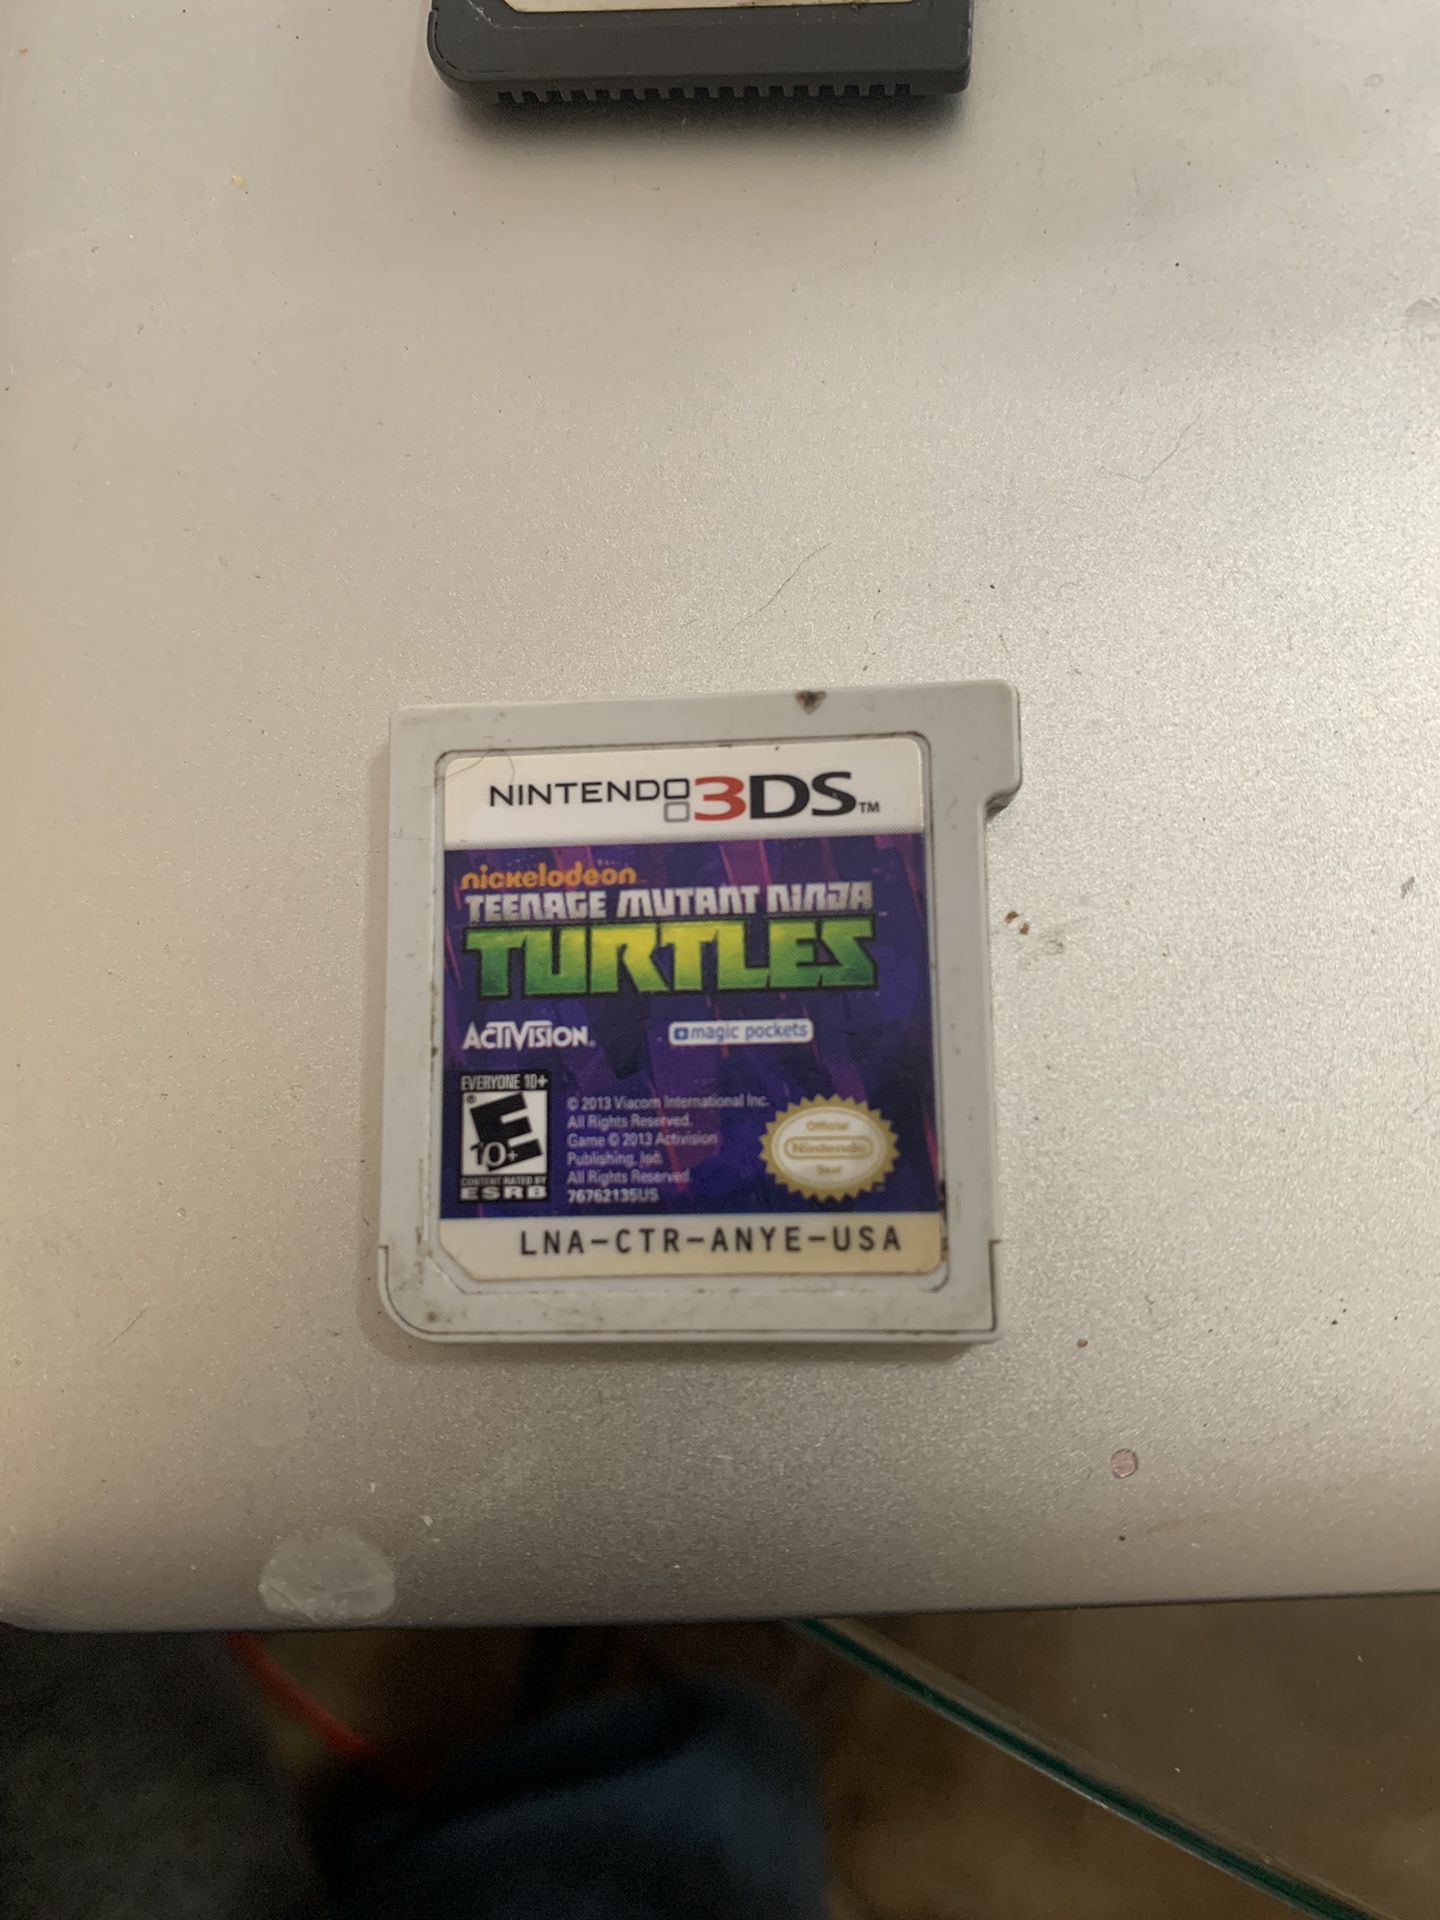 Nintendo 3DS Turtles Game $15